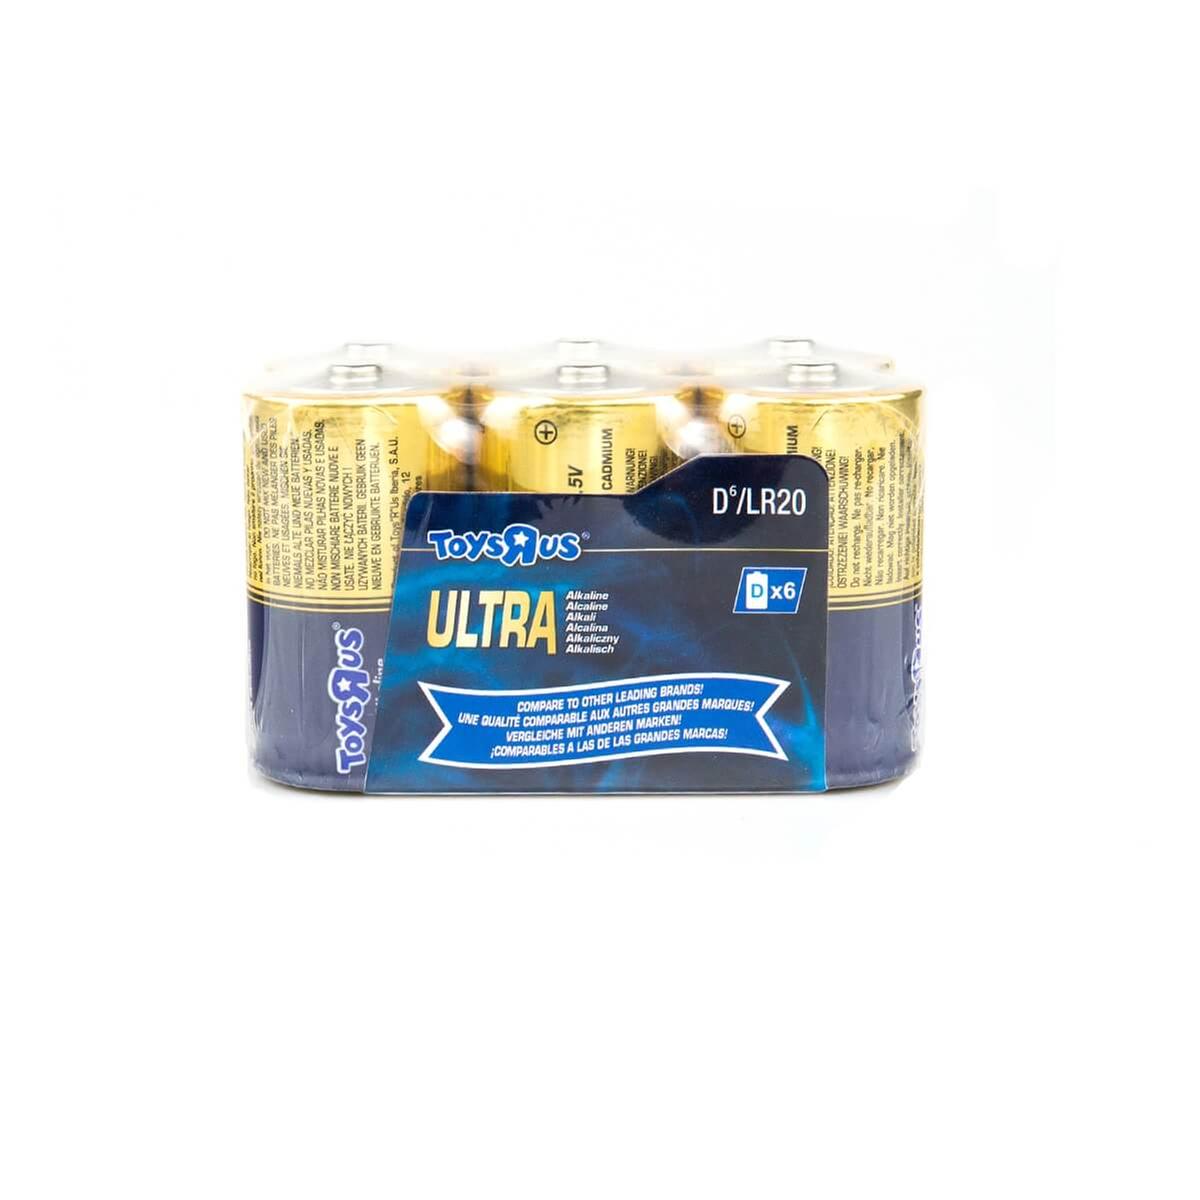 Ultra - Pack 6 Pilas D Ultra Alcalinas | D Pilas | Toys"R"Us España